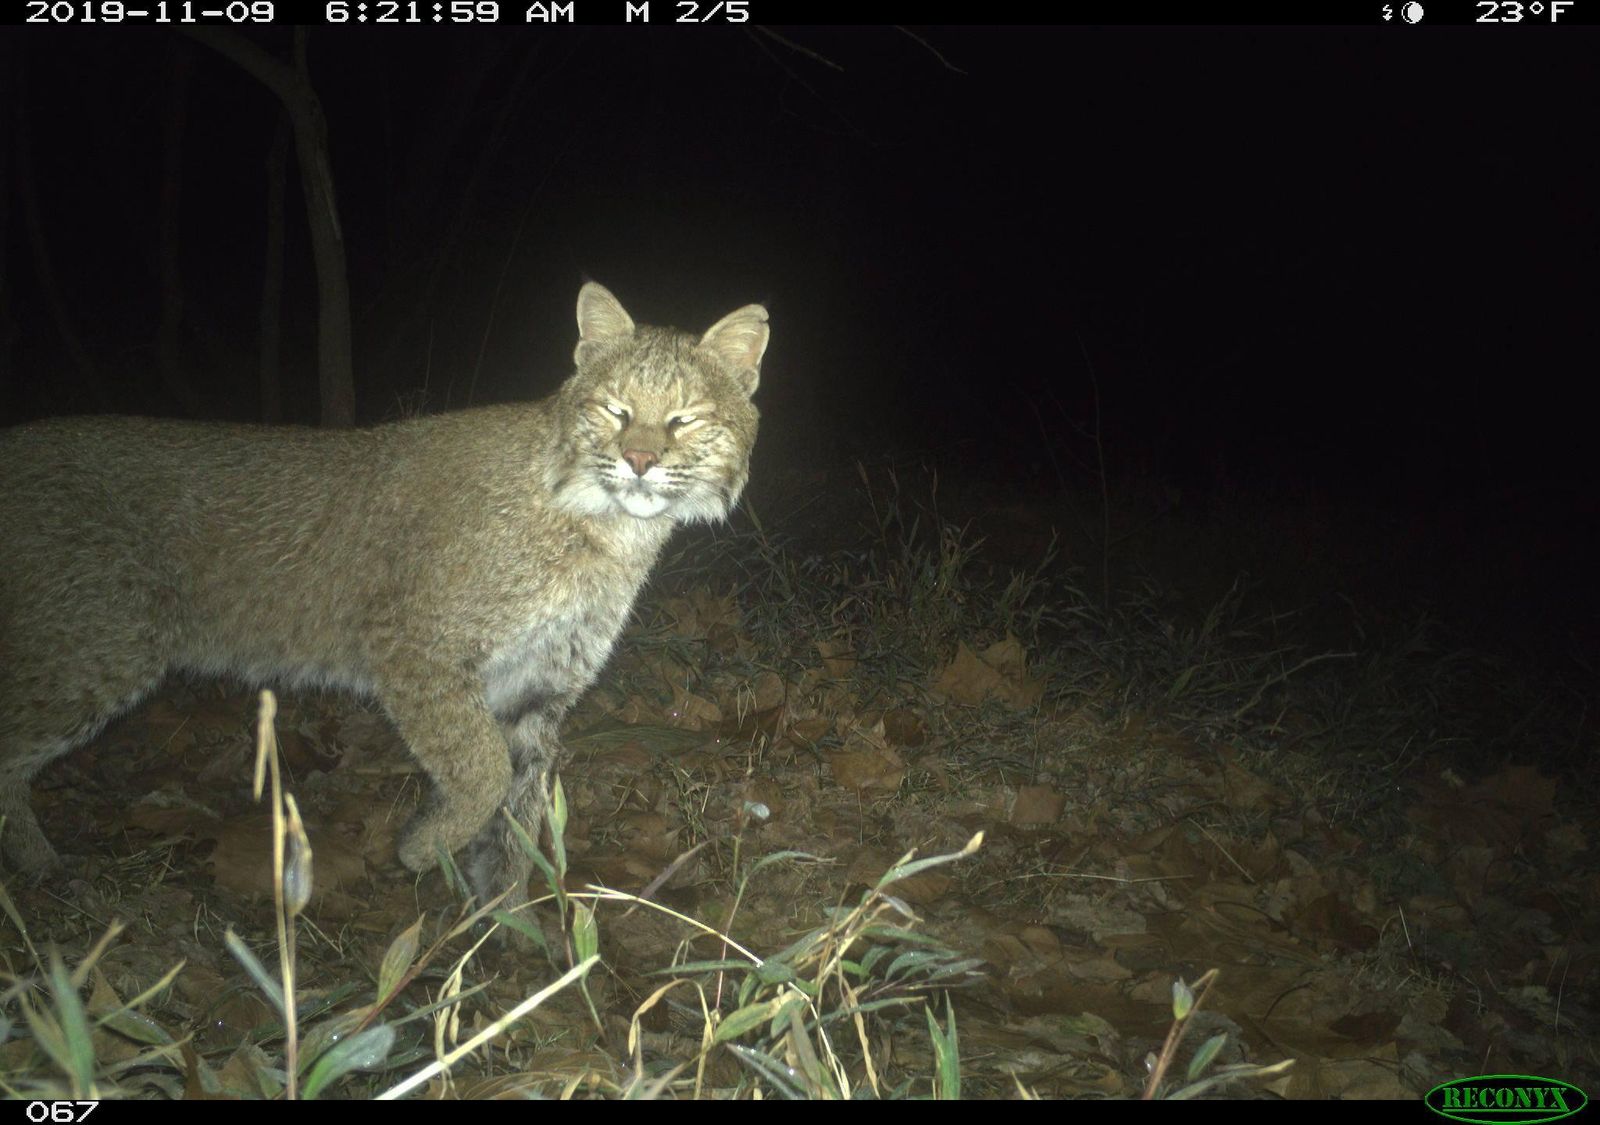 Unusual Urban Bobcat Spotted in Washington, . | Smart News| Smithsonian  Magazine